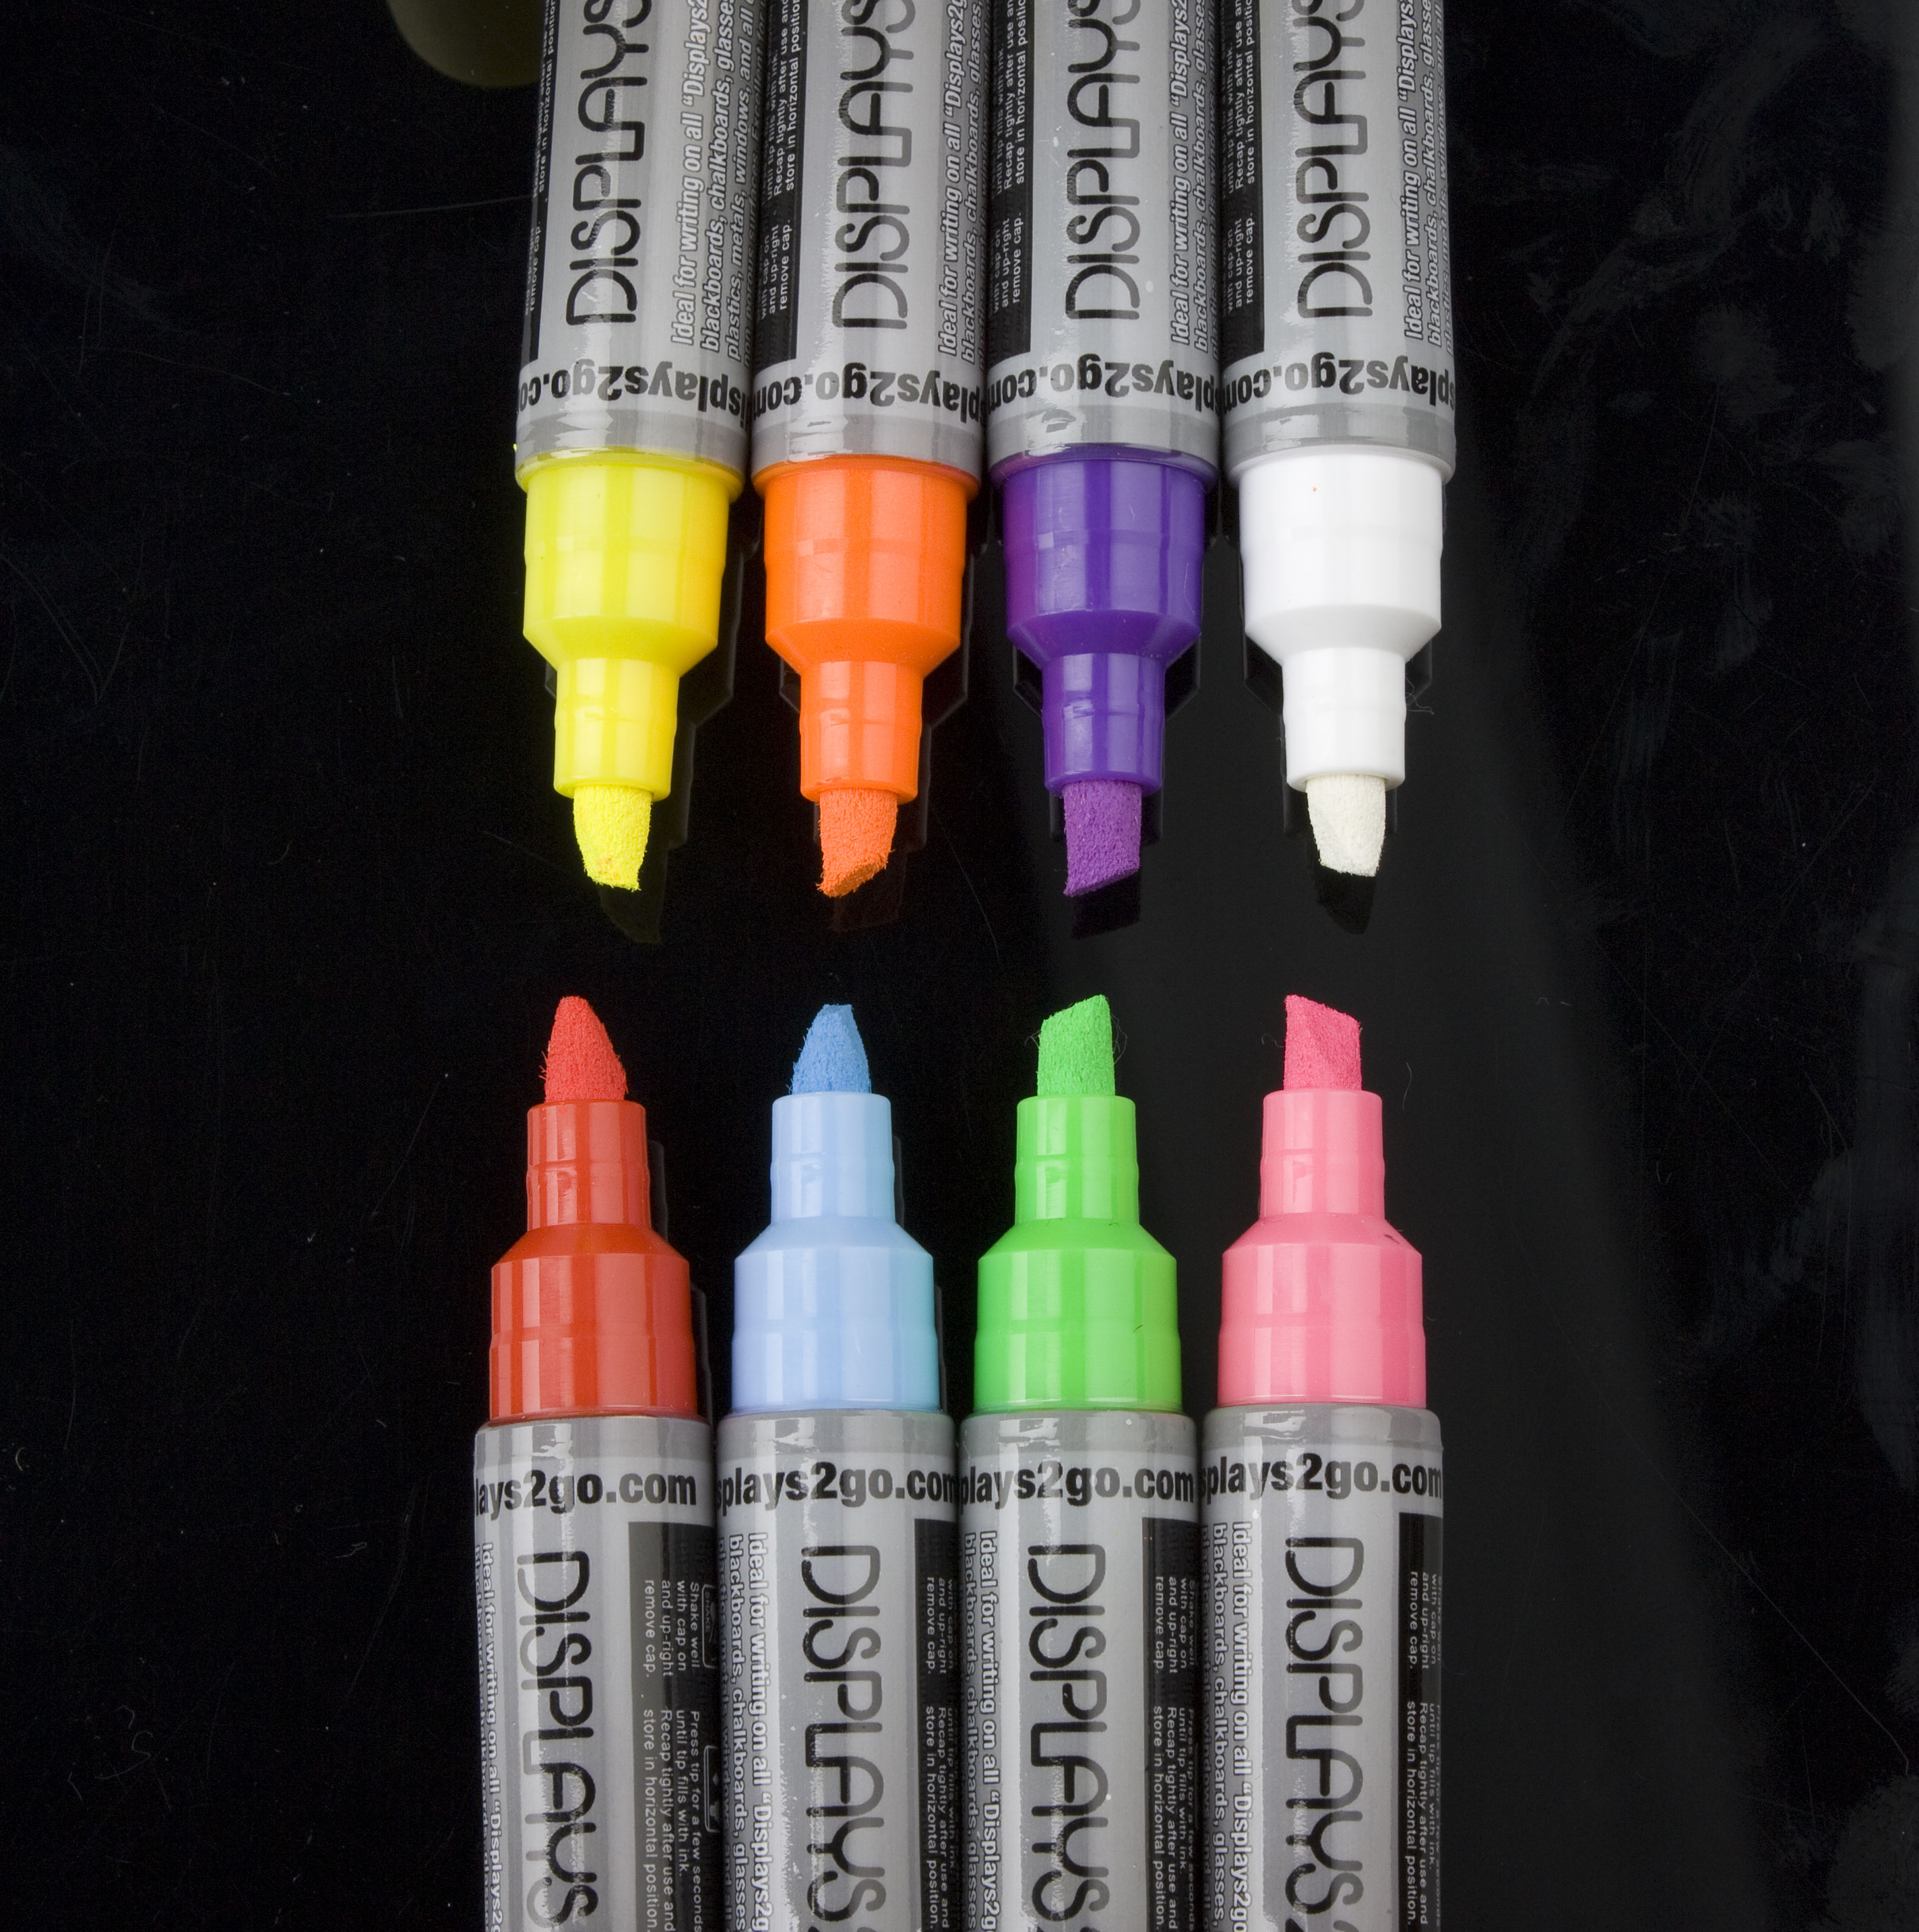  Operitacx 8pcs Chalkboard Markers Glow in The Dark Markers  Liquid Light Pens Chalk Board Markers Dry Erase Marker Pen Liquid Chalk Pen  Chalk Markers Pens Erasable Highlighter Pen Plastic : מוצרים